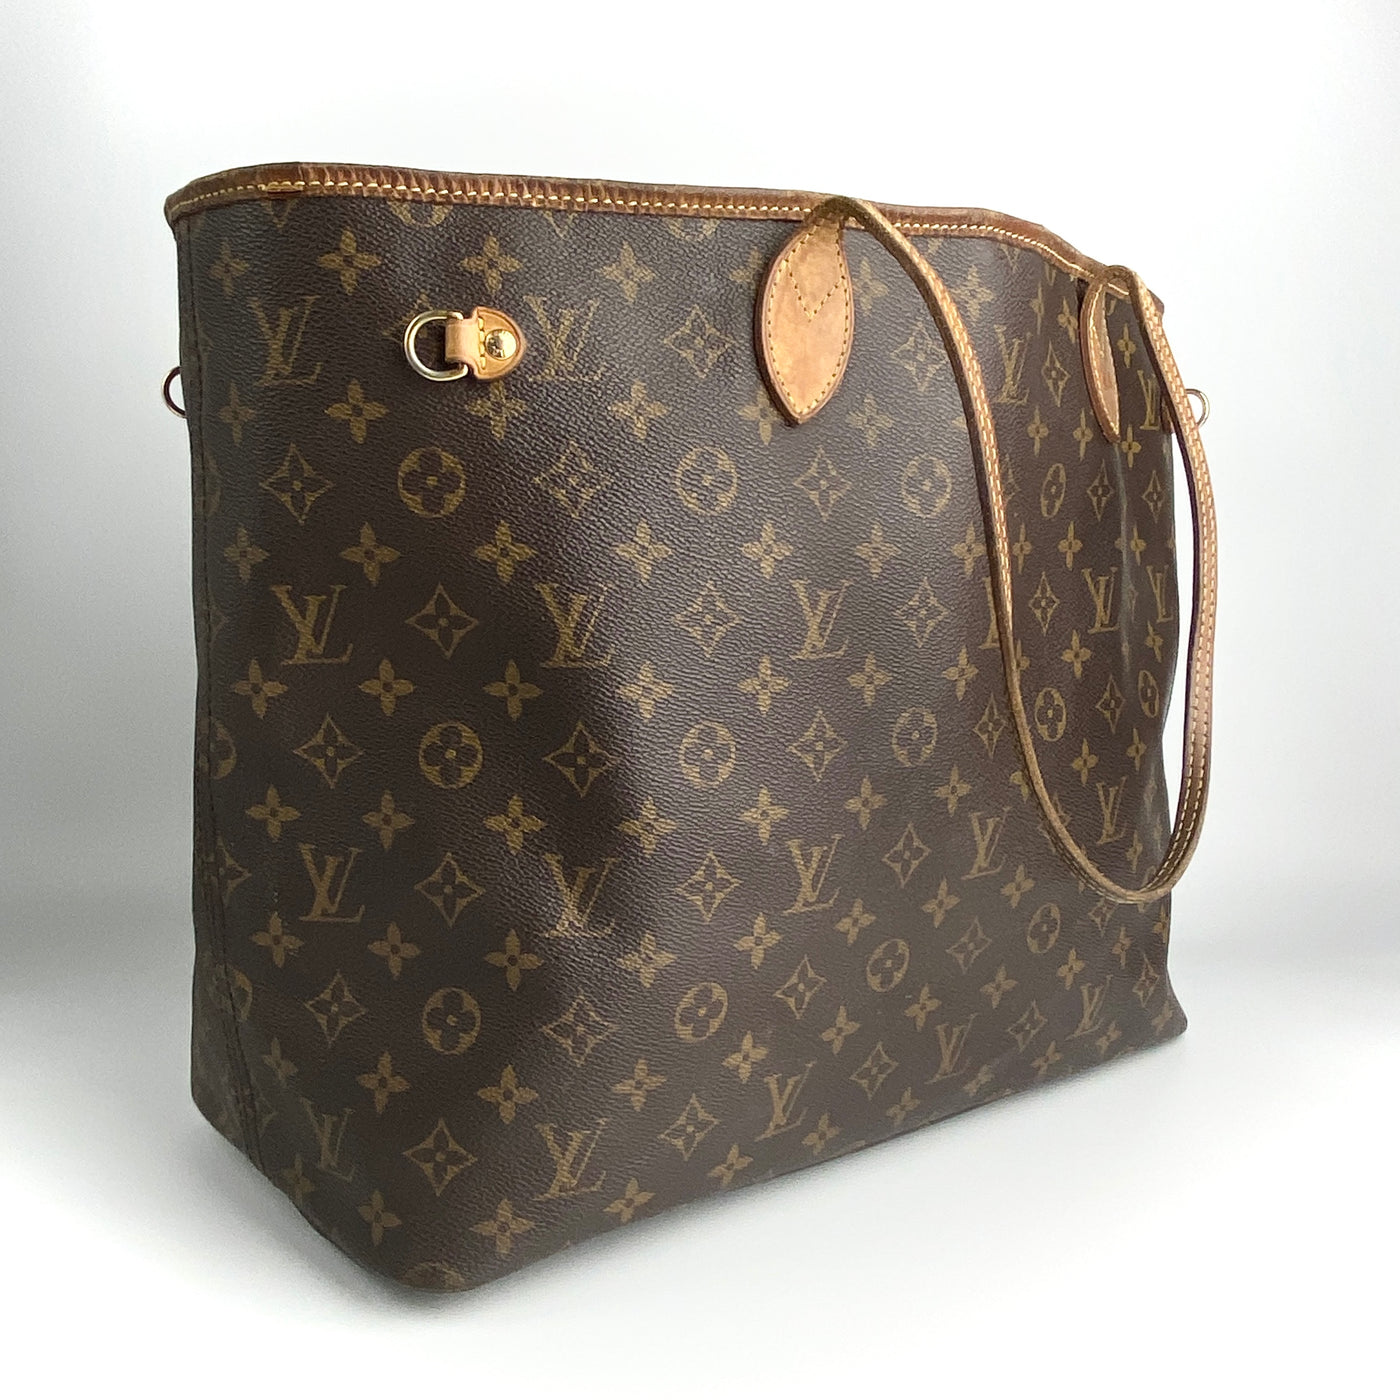 Louis Vuitton, Bags, Louis Vuitton Neverfull Gm